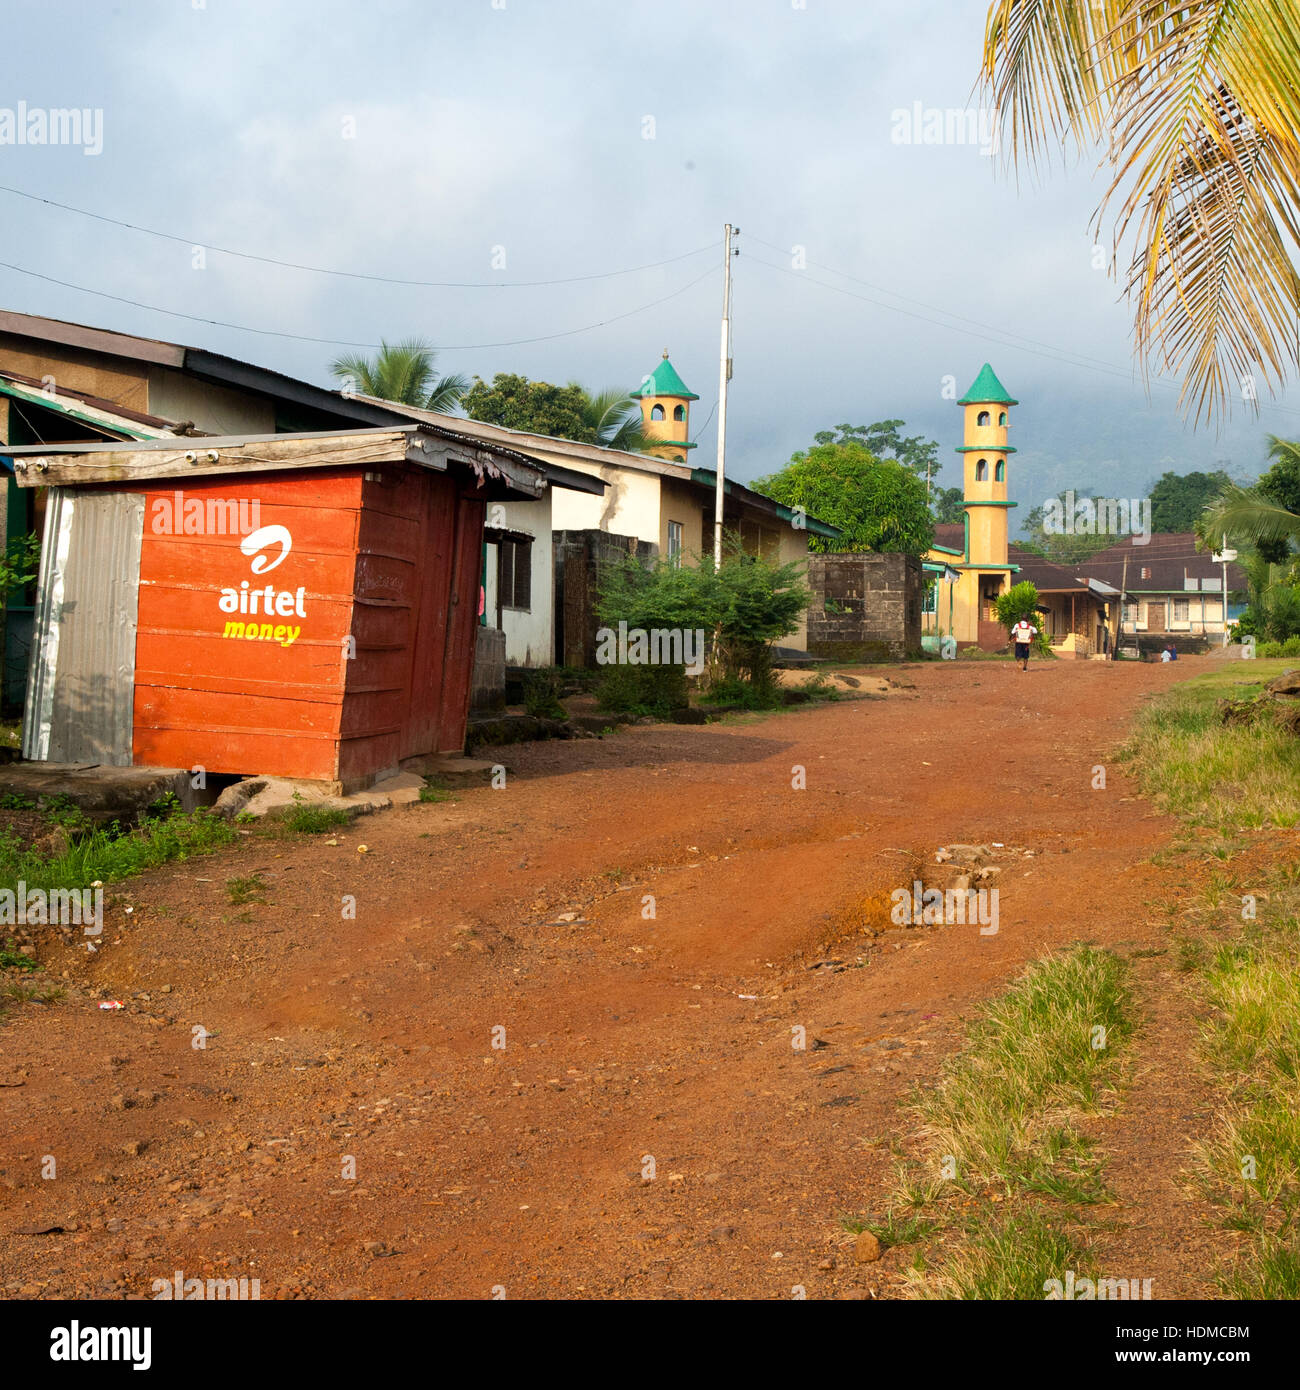 Mosque and cellphone kiosk in Kenema, Sierra Leone Stock Photo